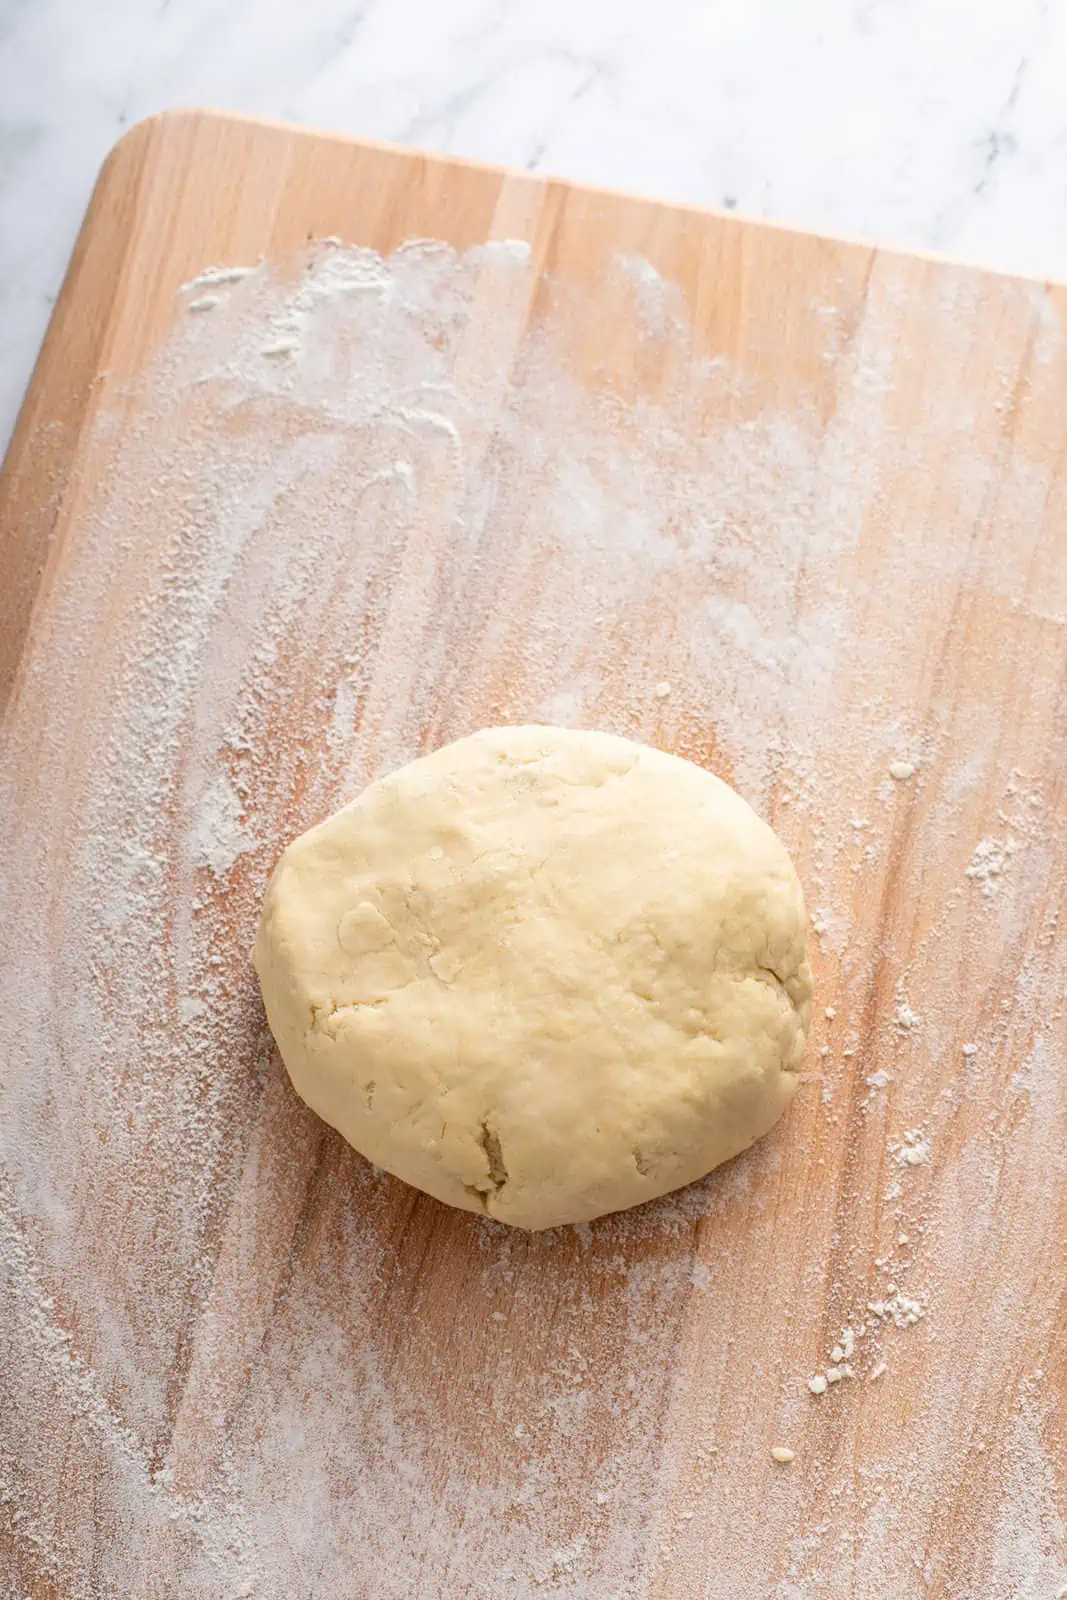 Ball of pie dough on a floured wooden cutting board.